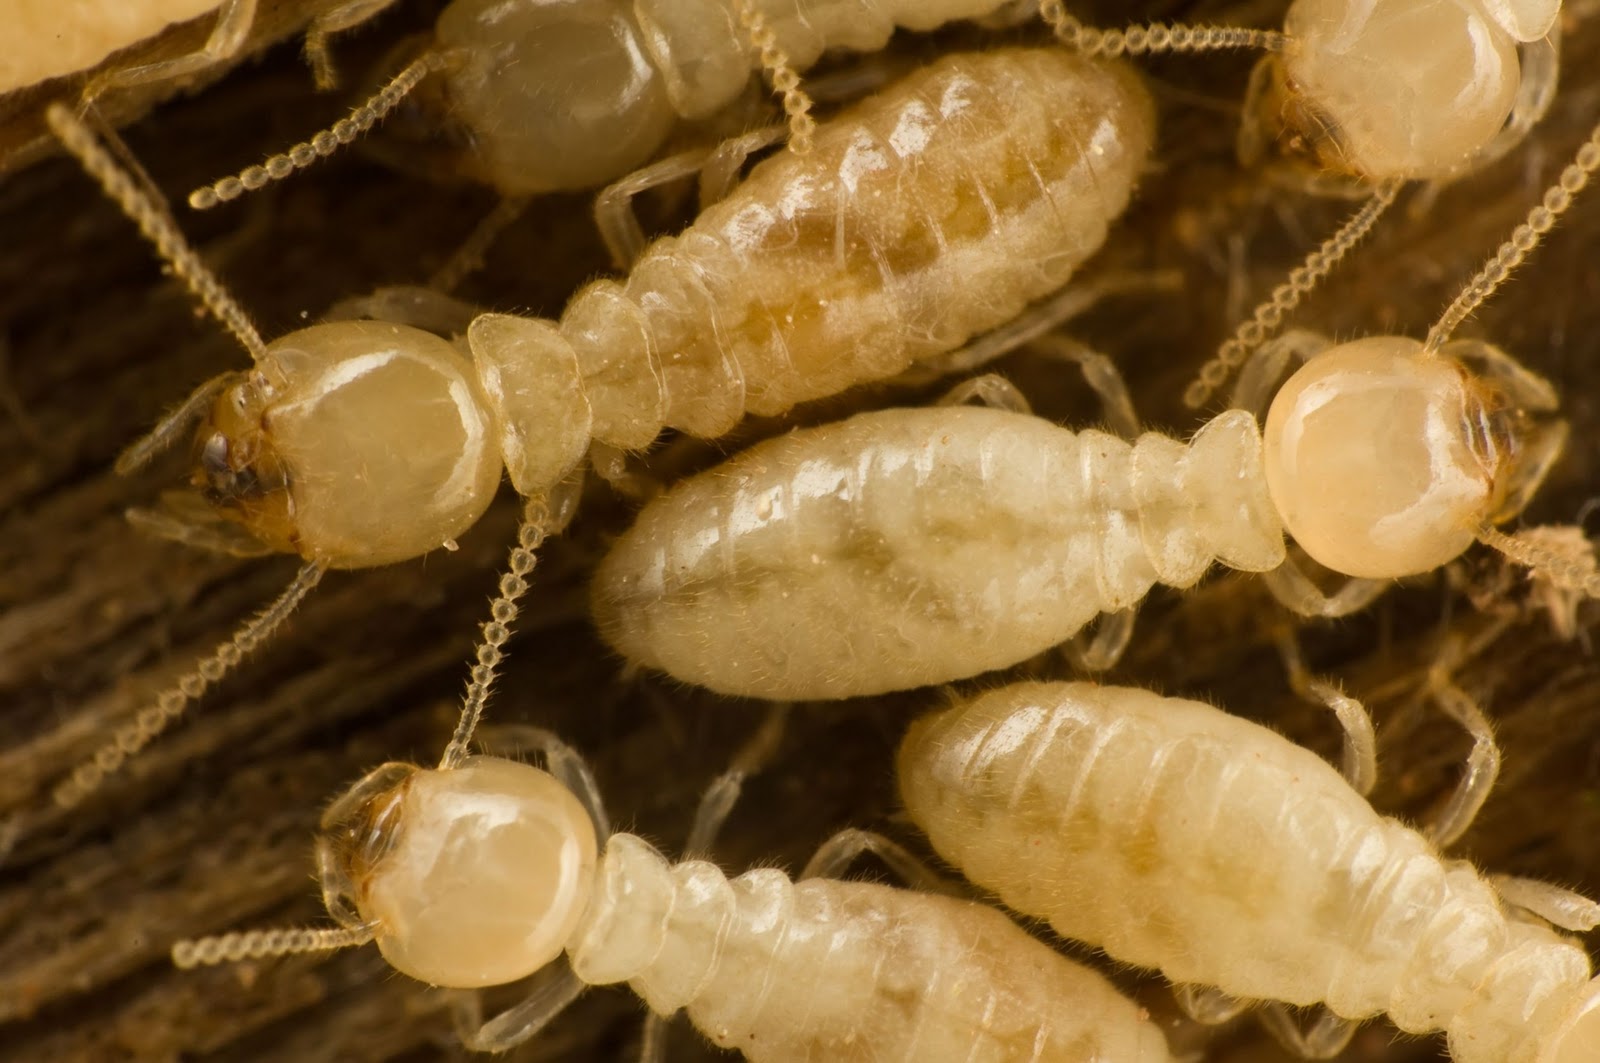 Asian Subterranean Termites